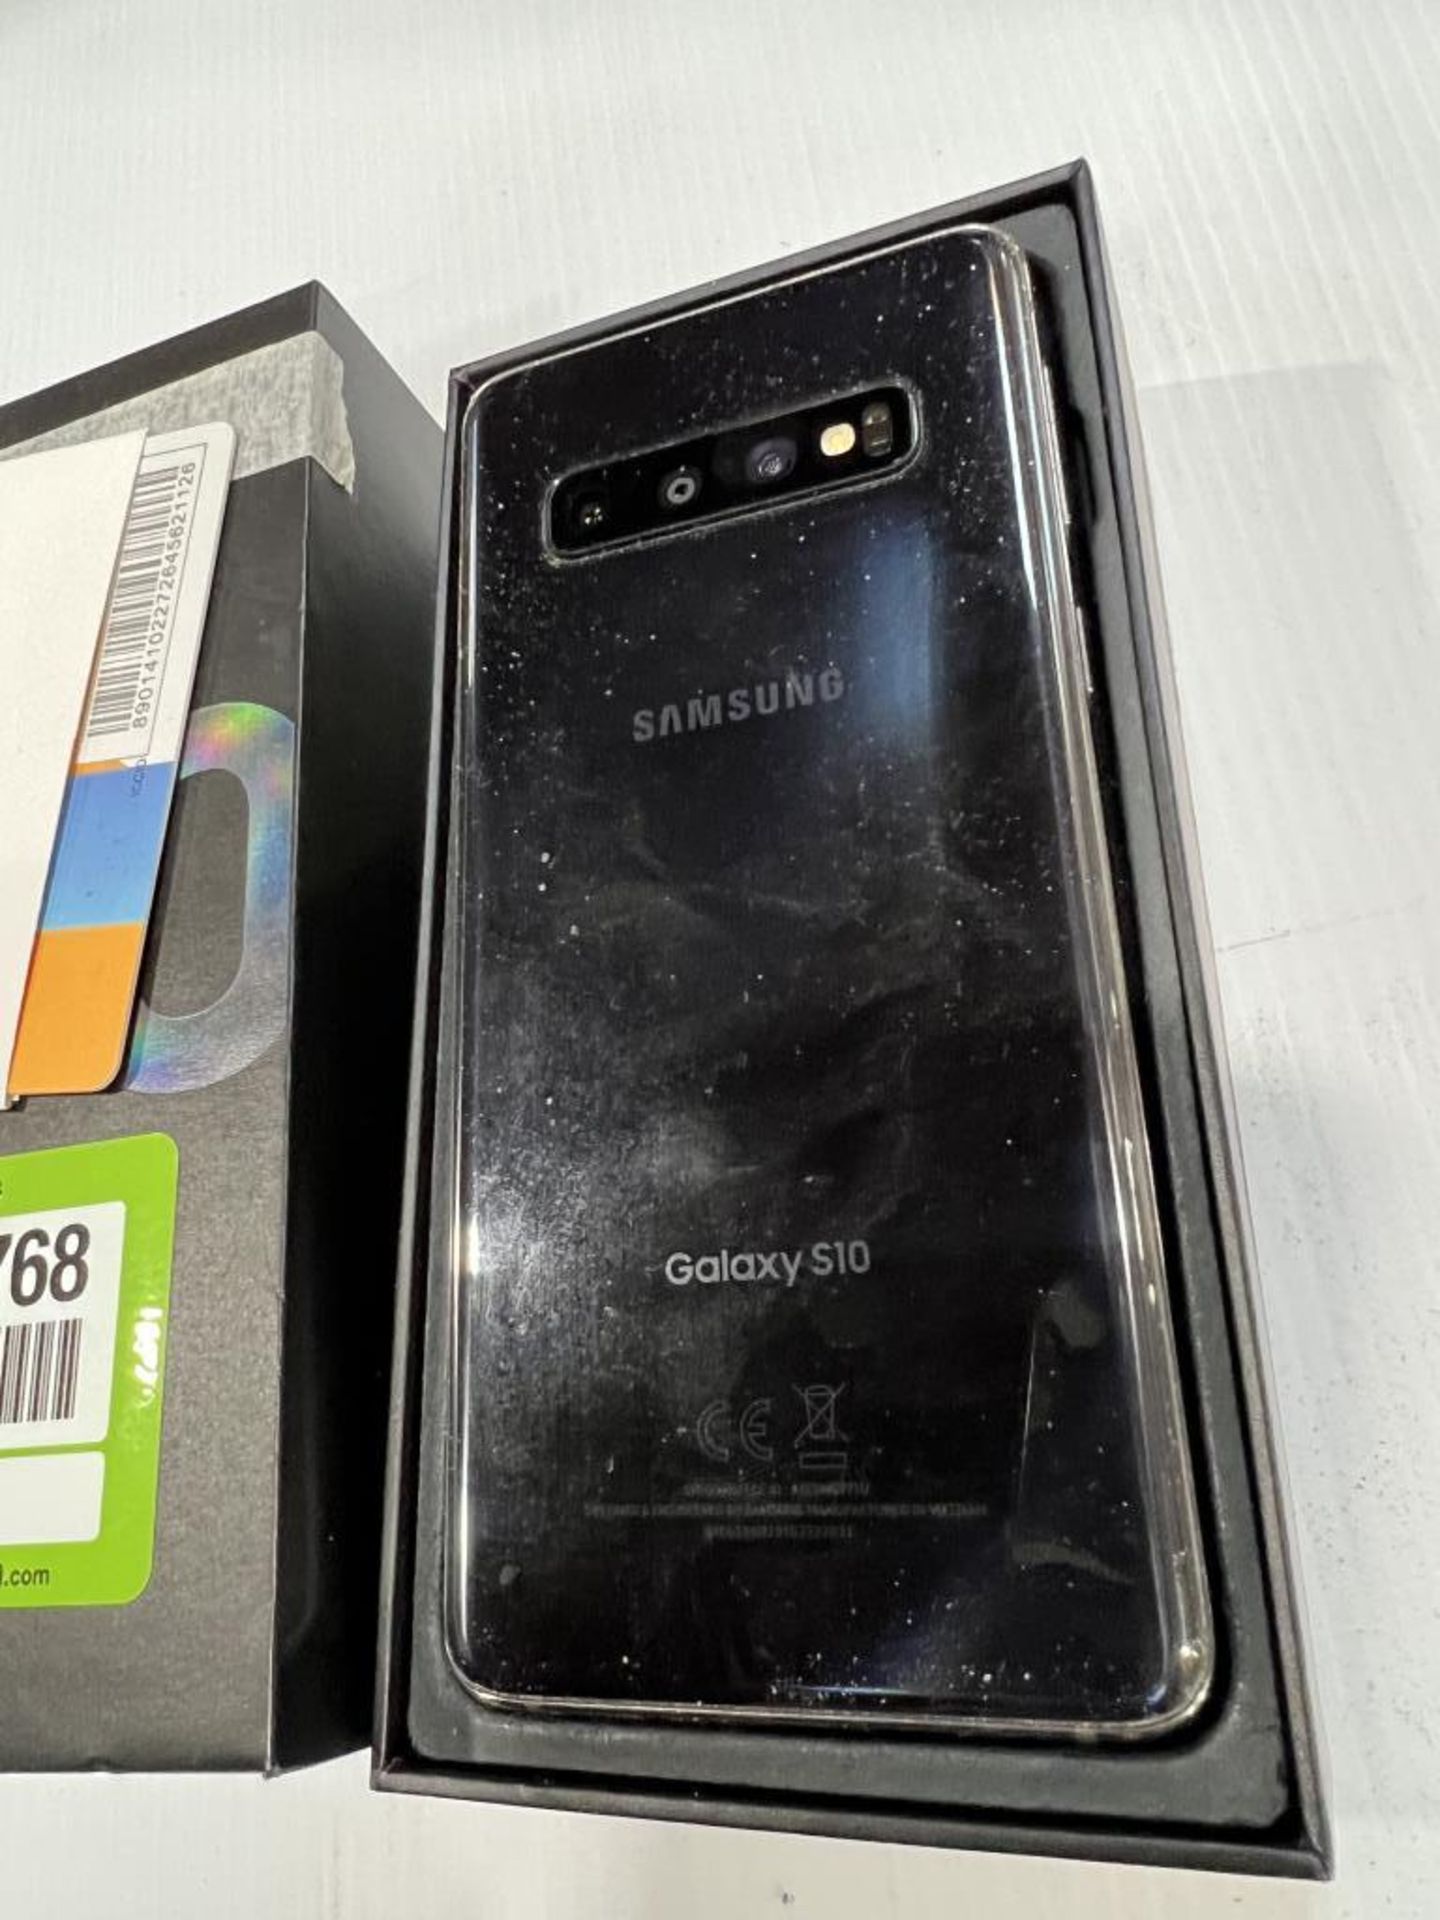 Samsung S10 - Image 2 of 2